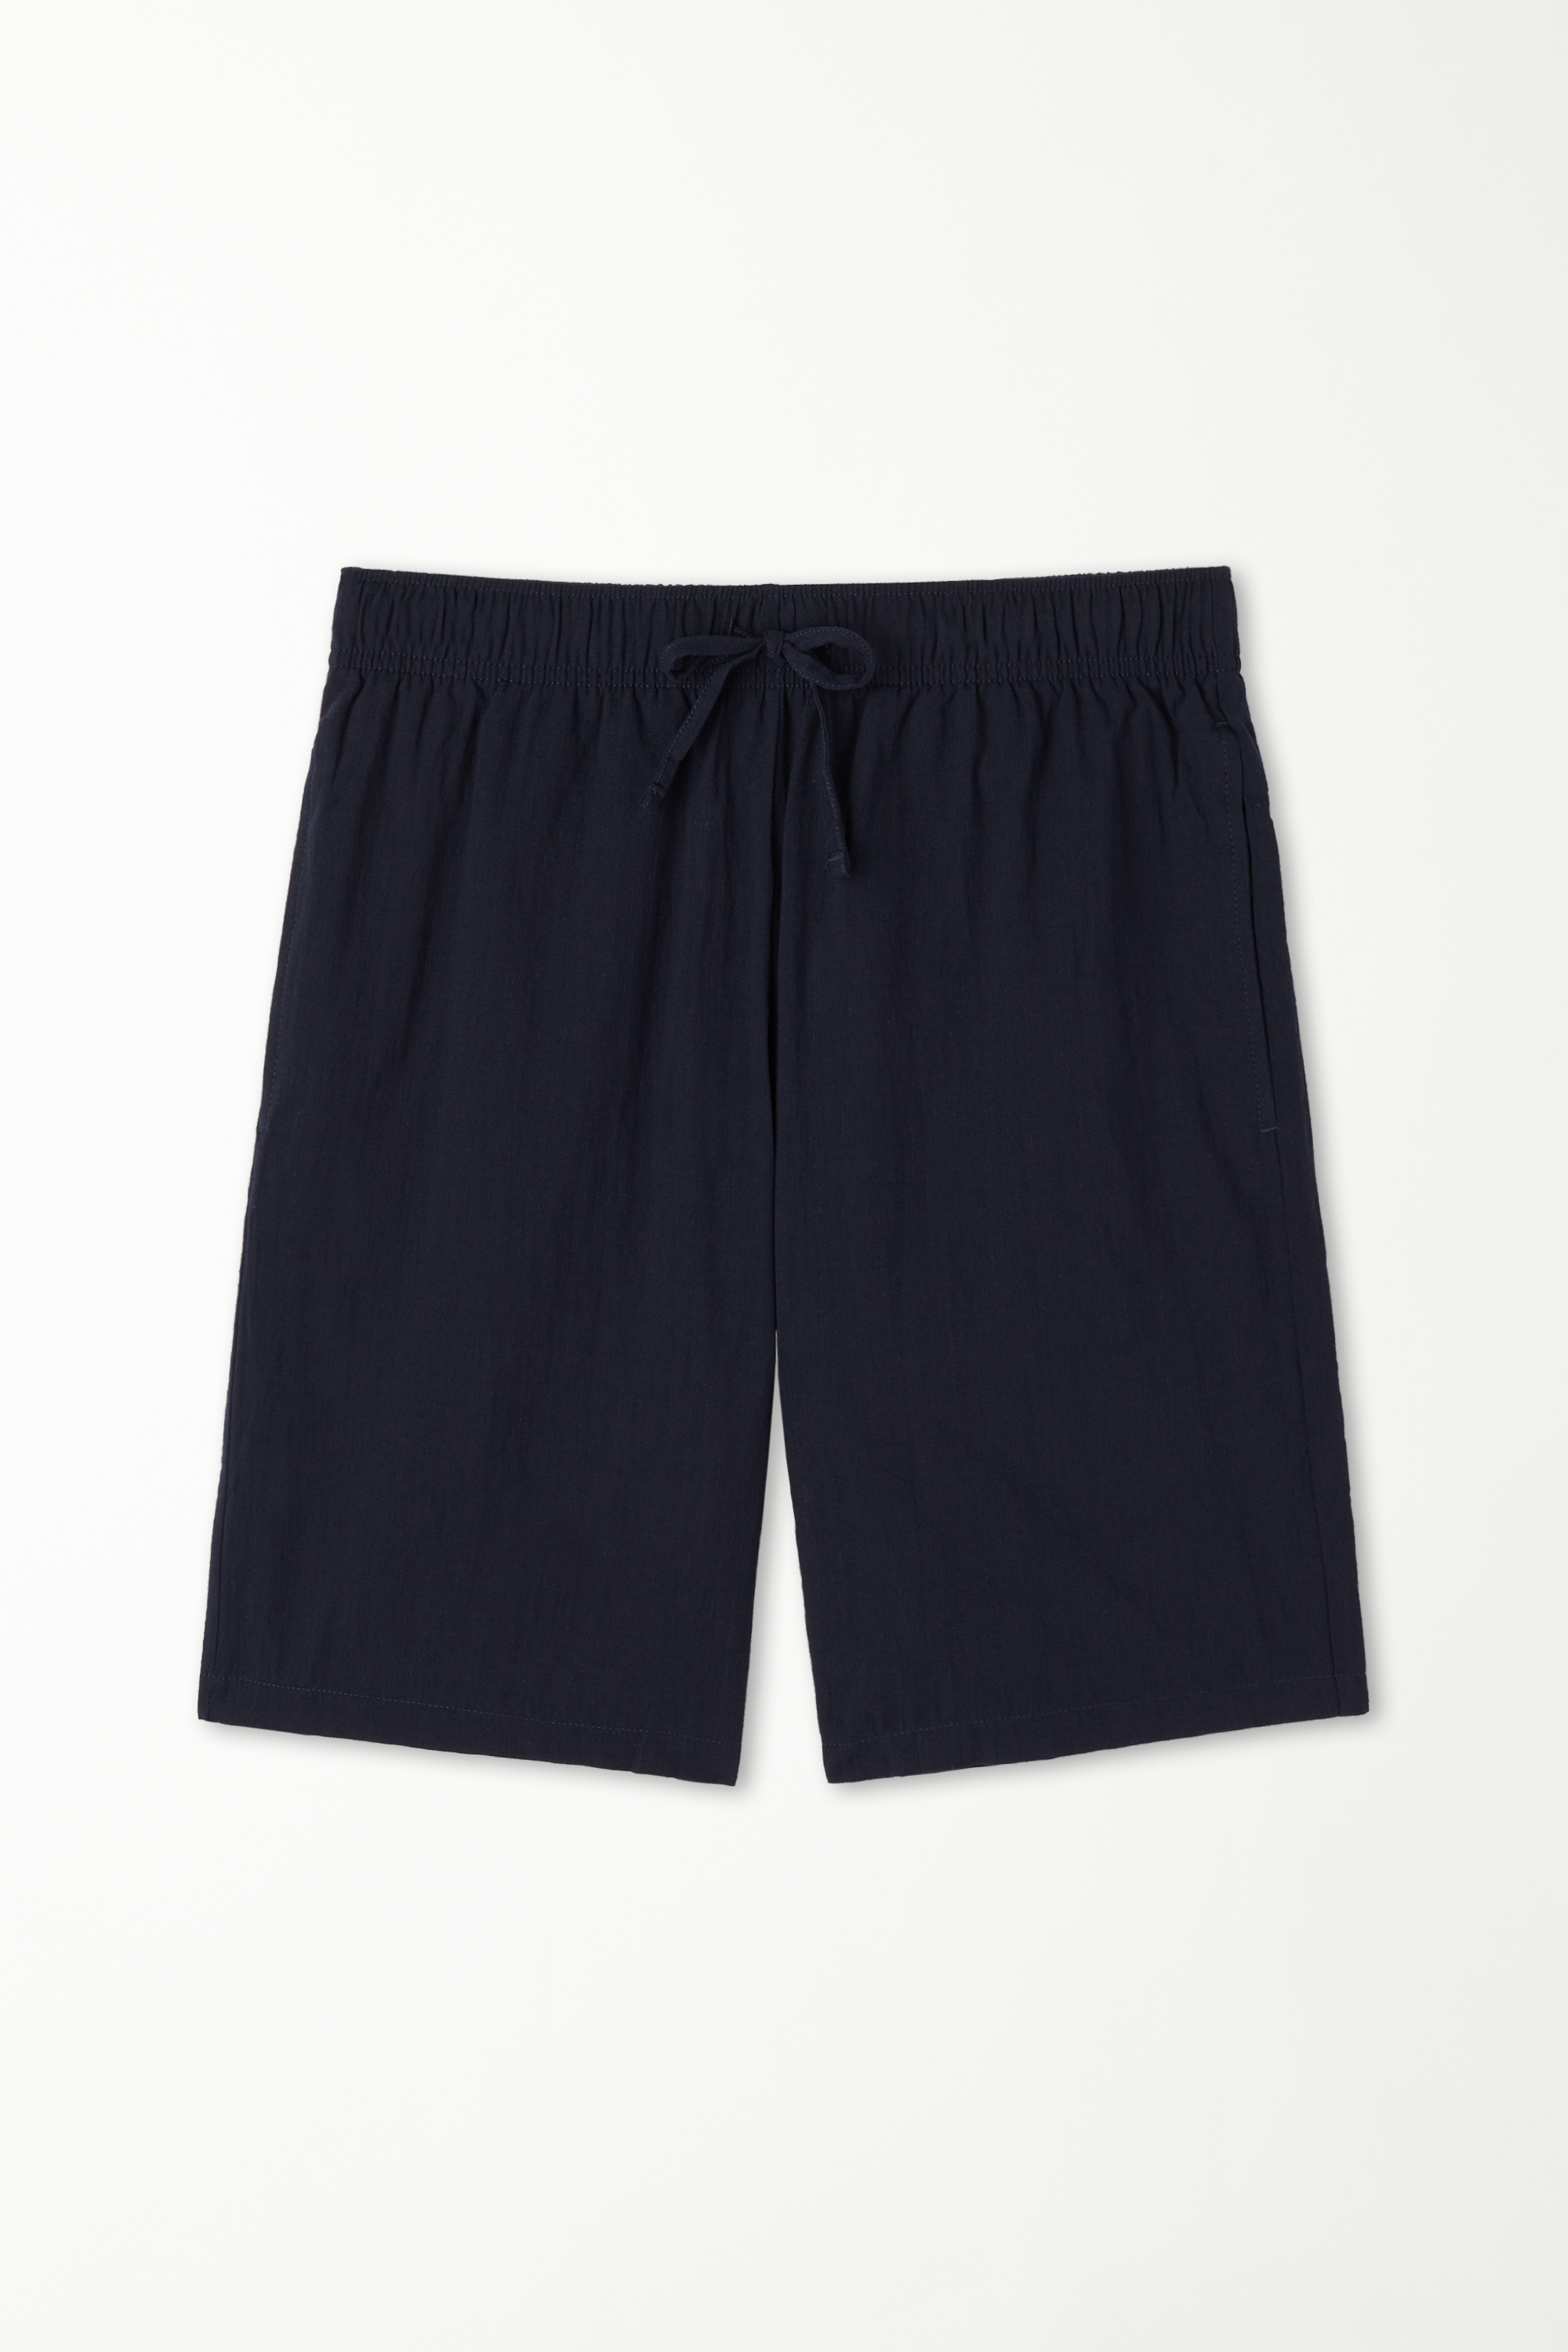 Pantaloni Scurți din Bumbac Super-Lejer 100% cu Buzunare